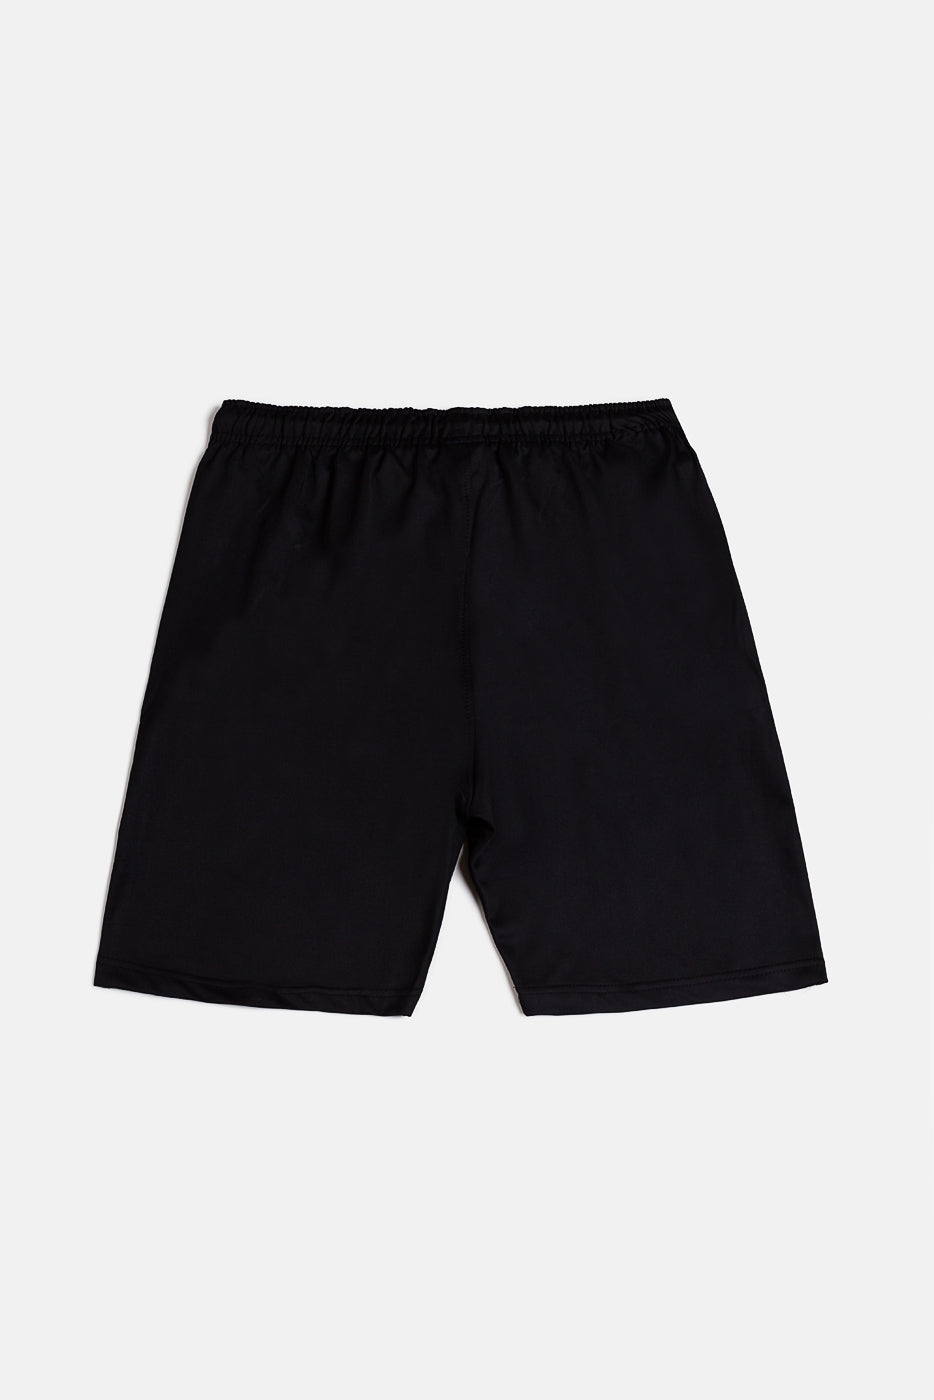 ADDAS Dri Fit Premium 3 Stripes Shorts –  Black